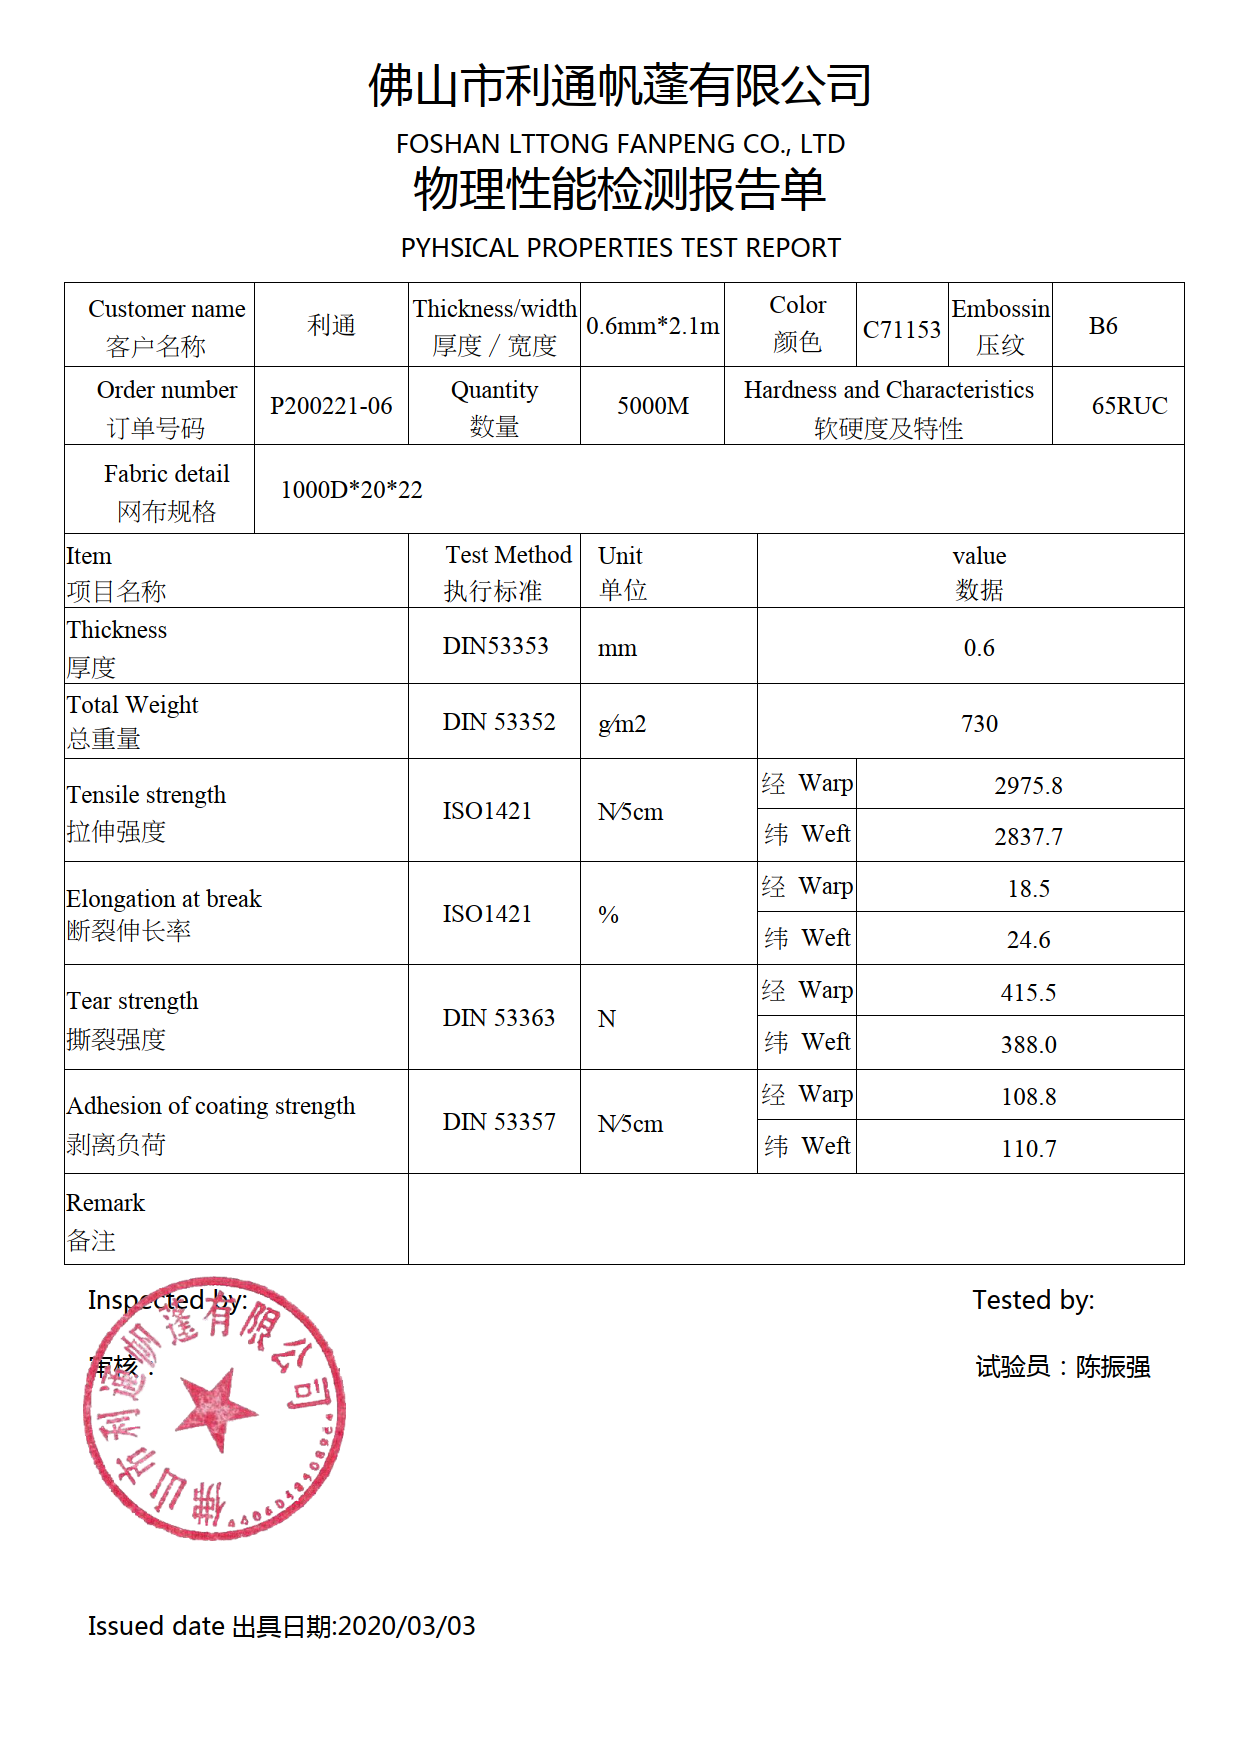 Data sheet for 0.6mm PVC coated tarpaulin